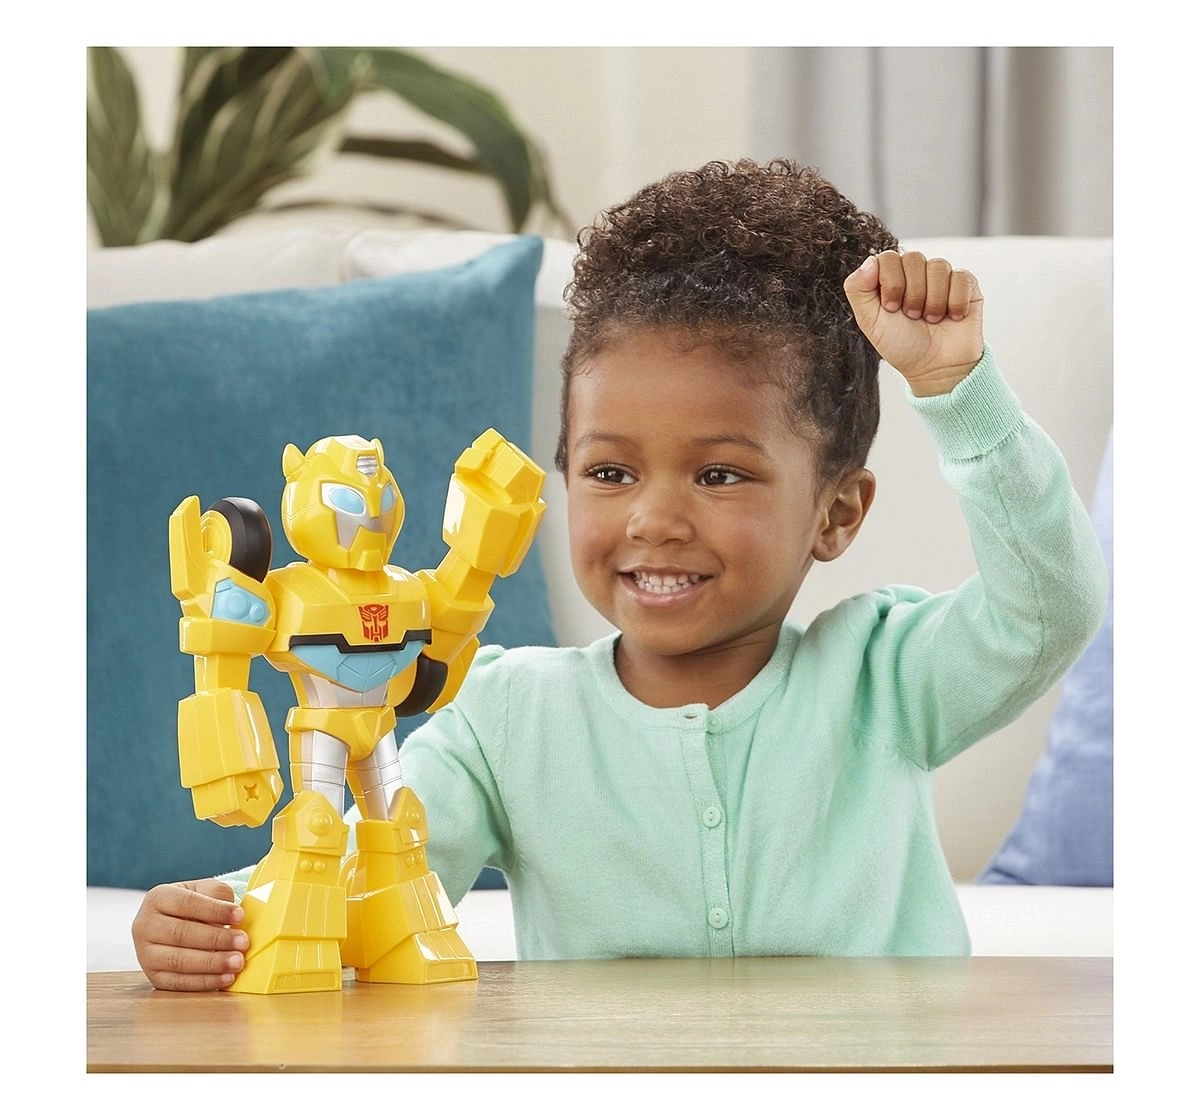 Mega Mighties Rescue Bots Academy: Mega Bumblebee Activity Toys for age 3Y+ 